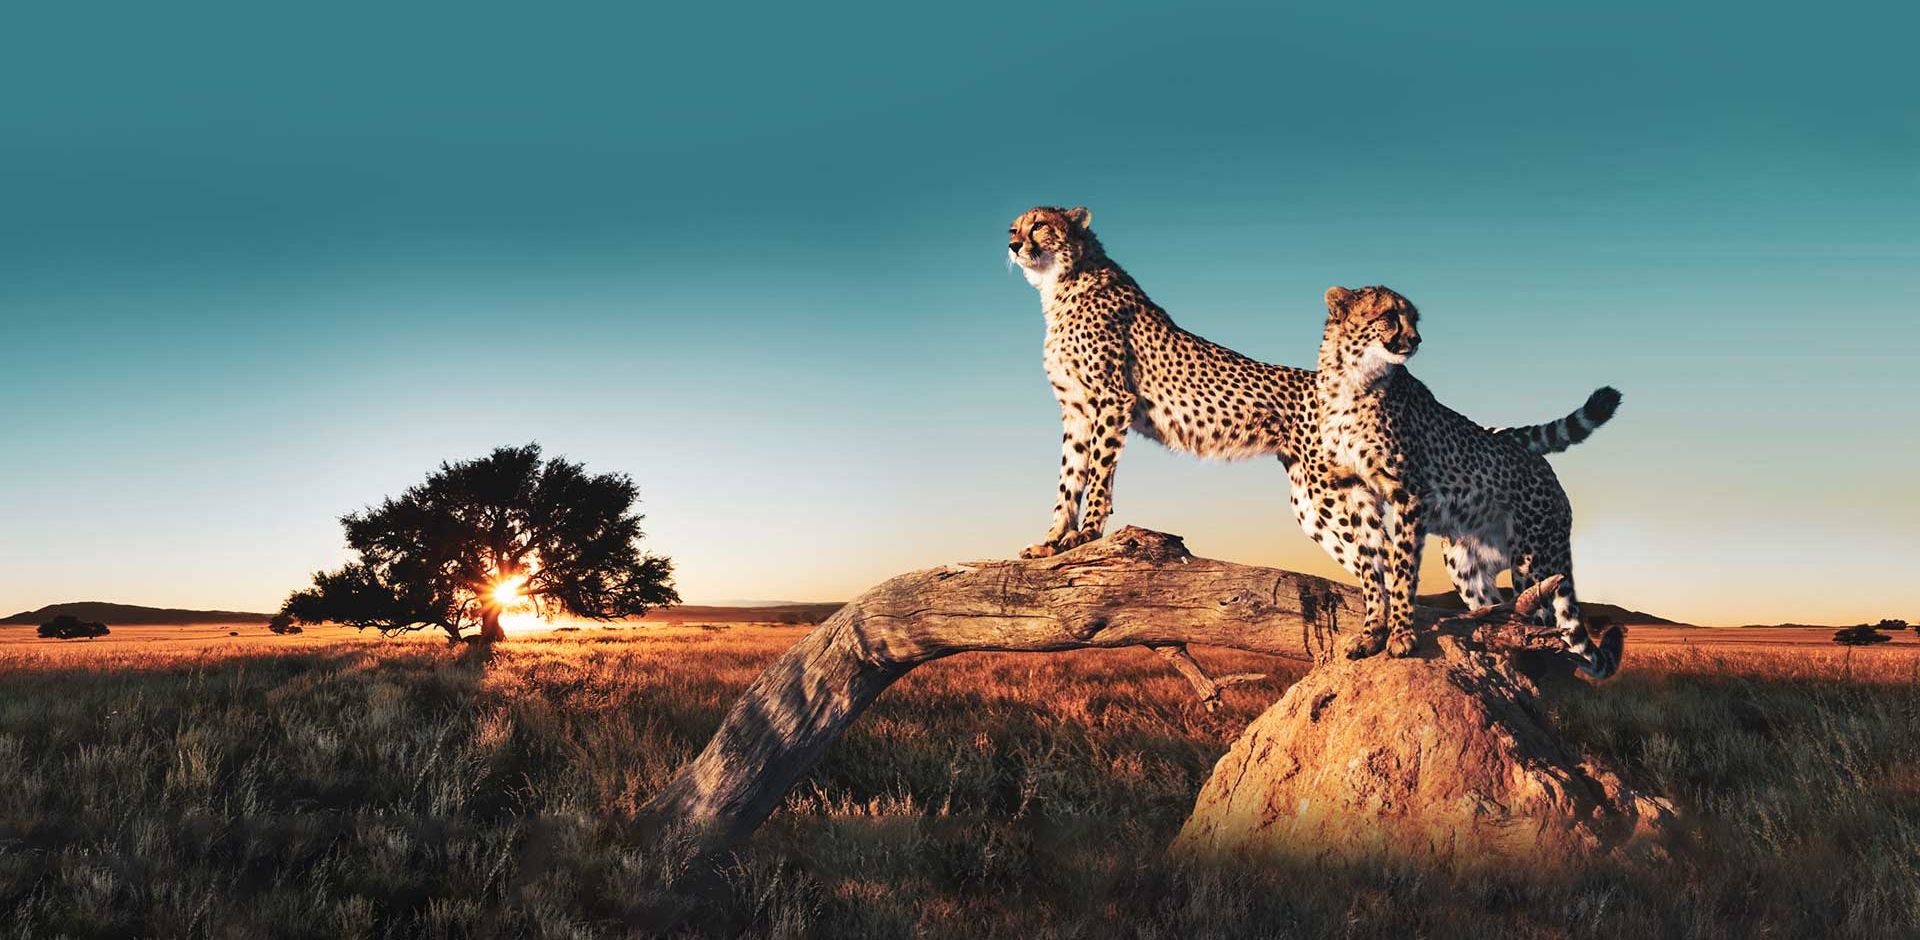 Kenya To Geparder Staar Paa Savannen Solnedgang